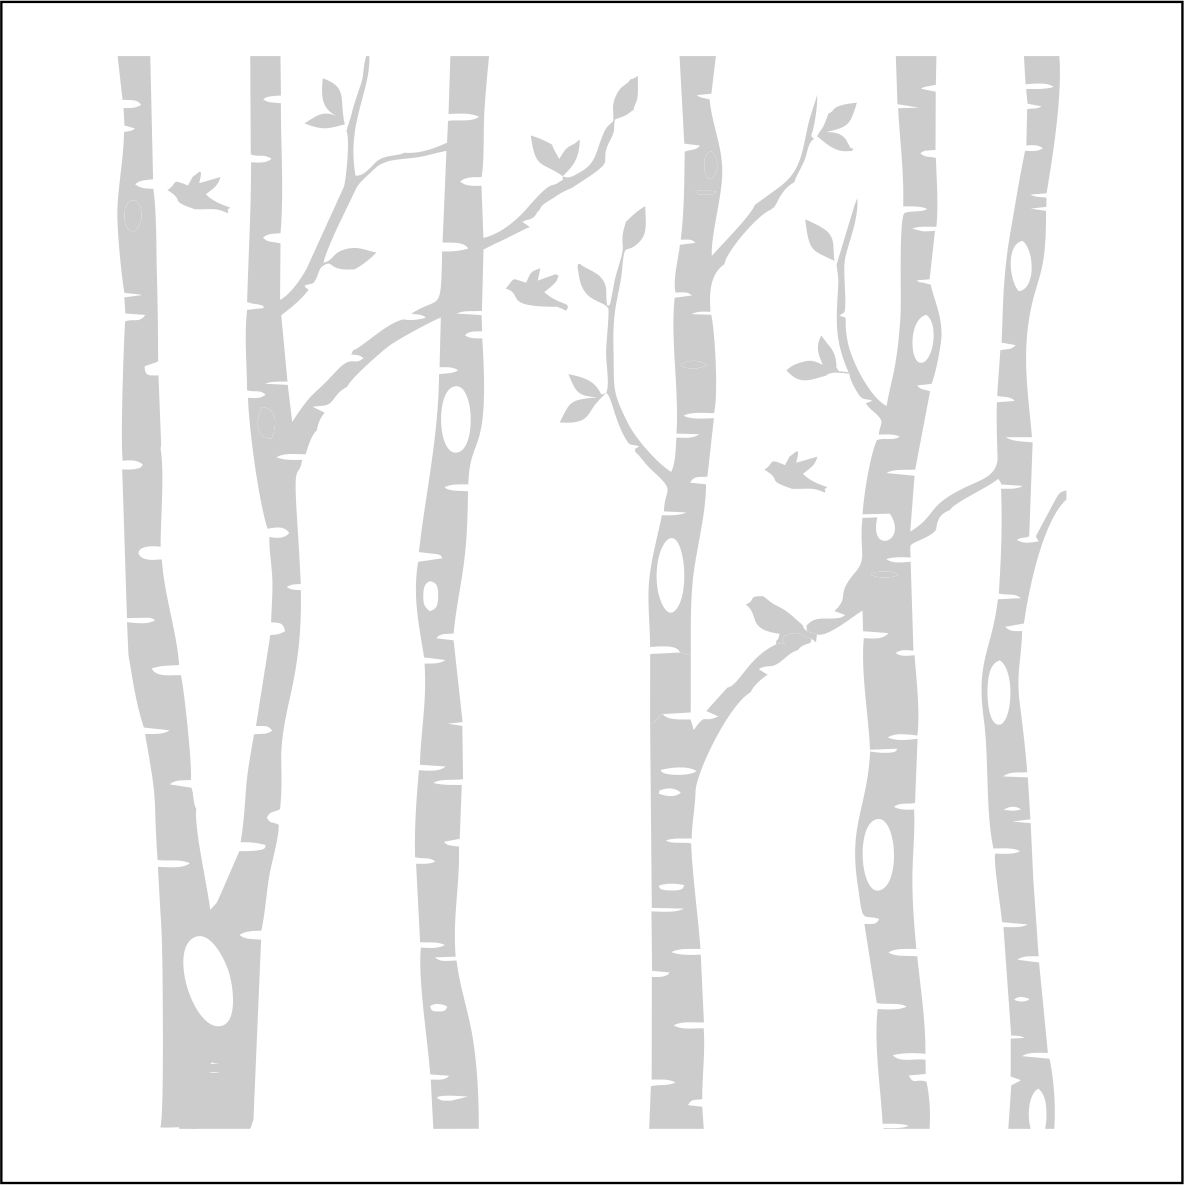 birch tree: birch tree